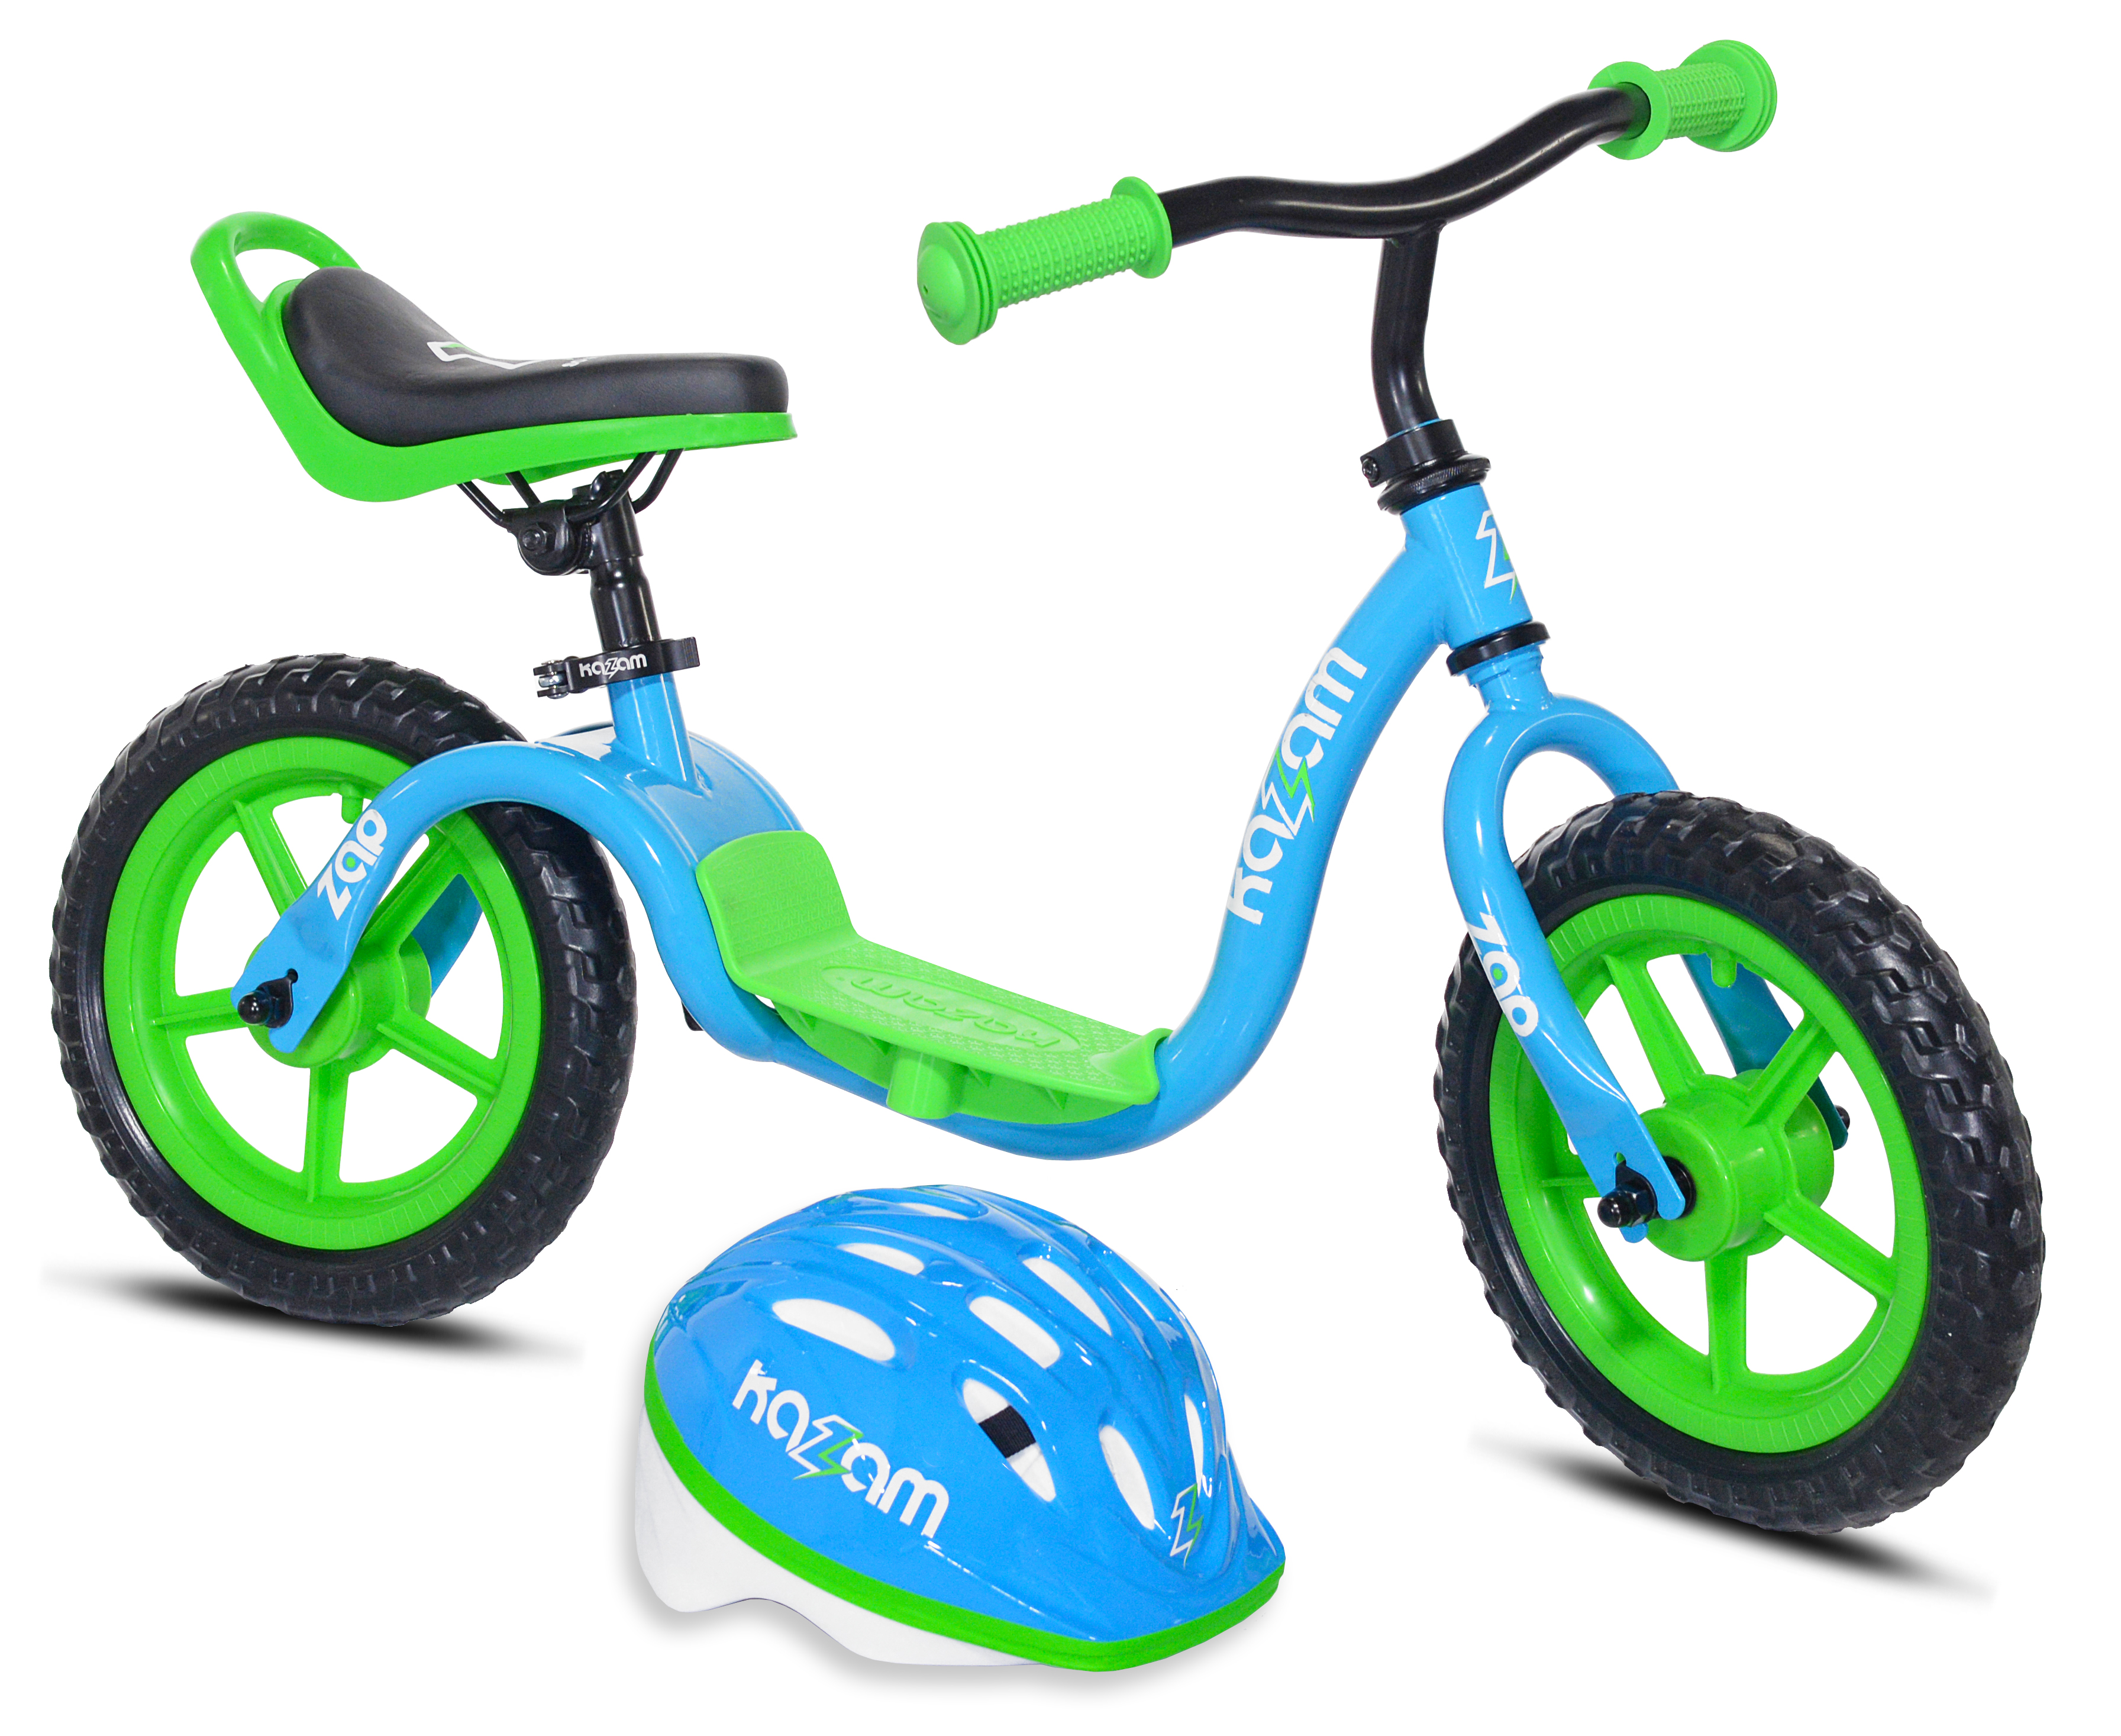 KaZAM 12" Child's Balance Bike and Helmet, Green/Blue - image 1 of 9